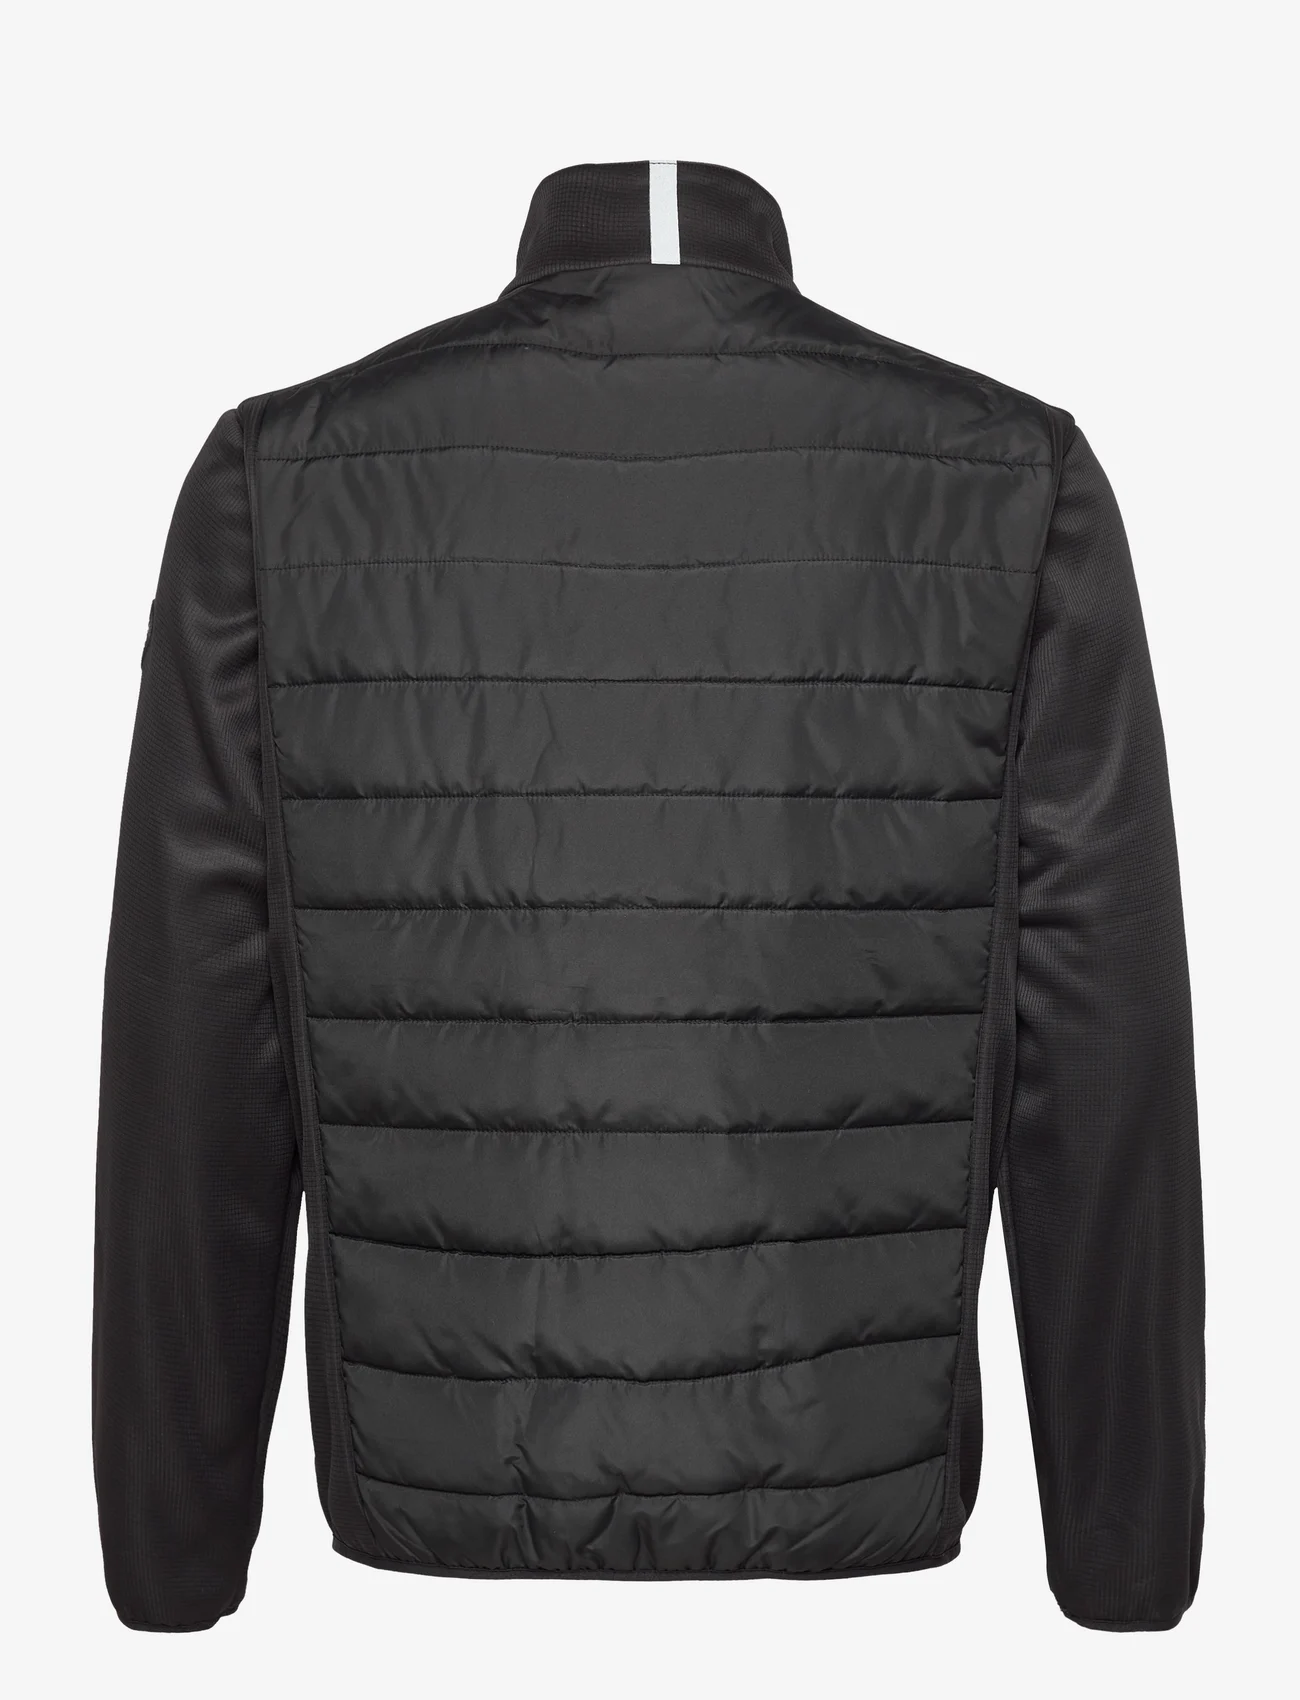 Lindbergh - Hybrid jacket - winter jackets - black - 1